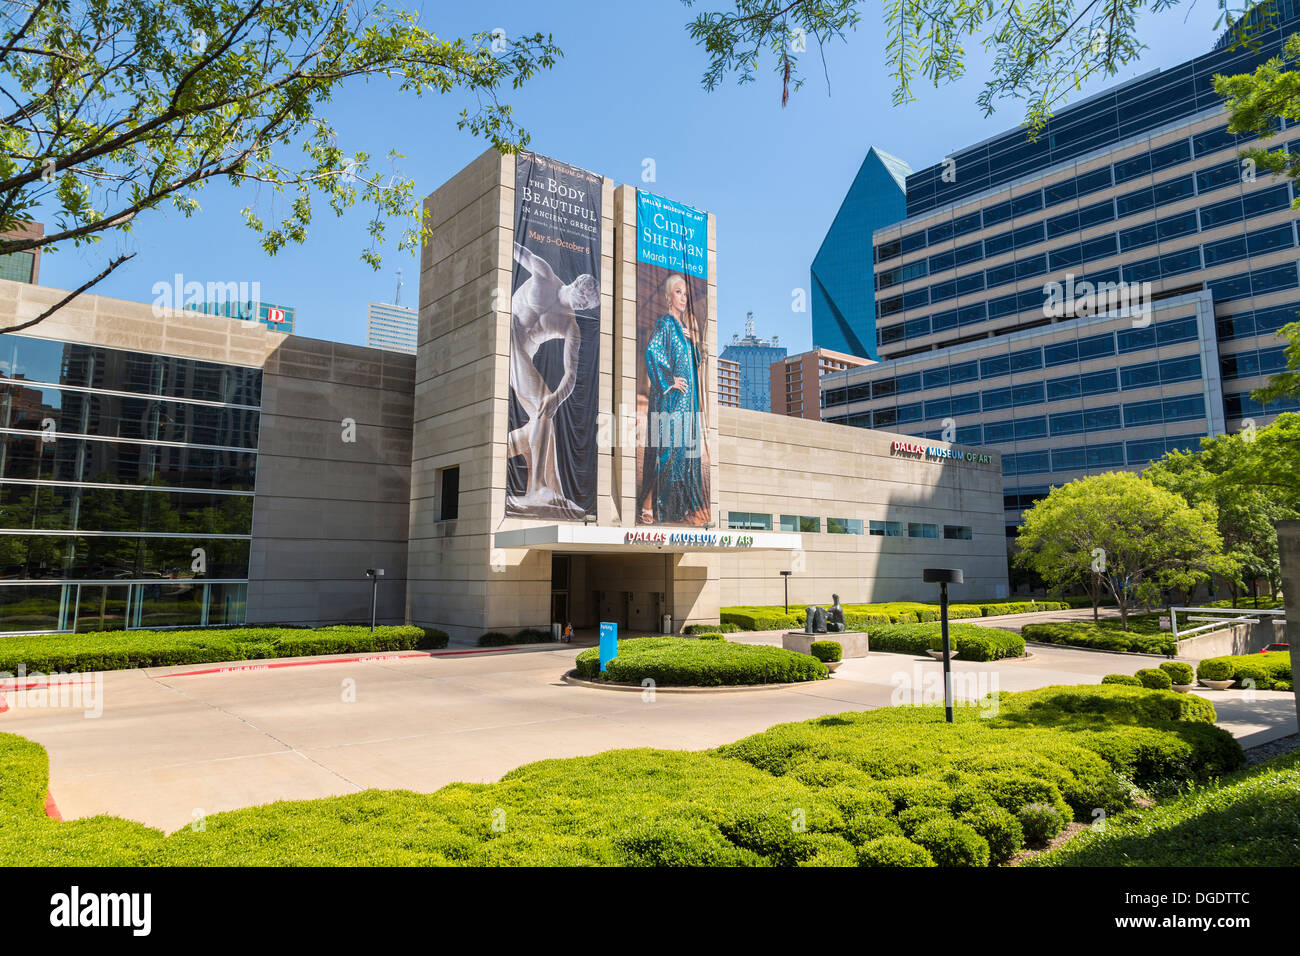 Dallas Museum of Art Texas Arts District USA Stock Photo